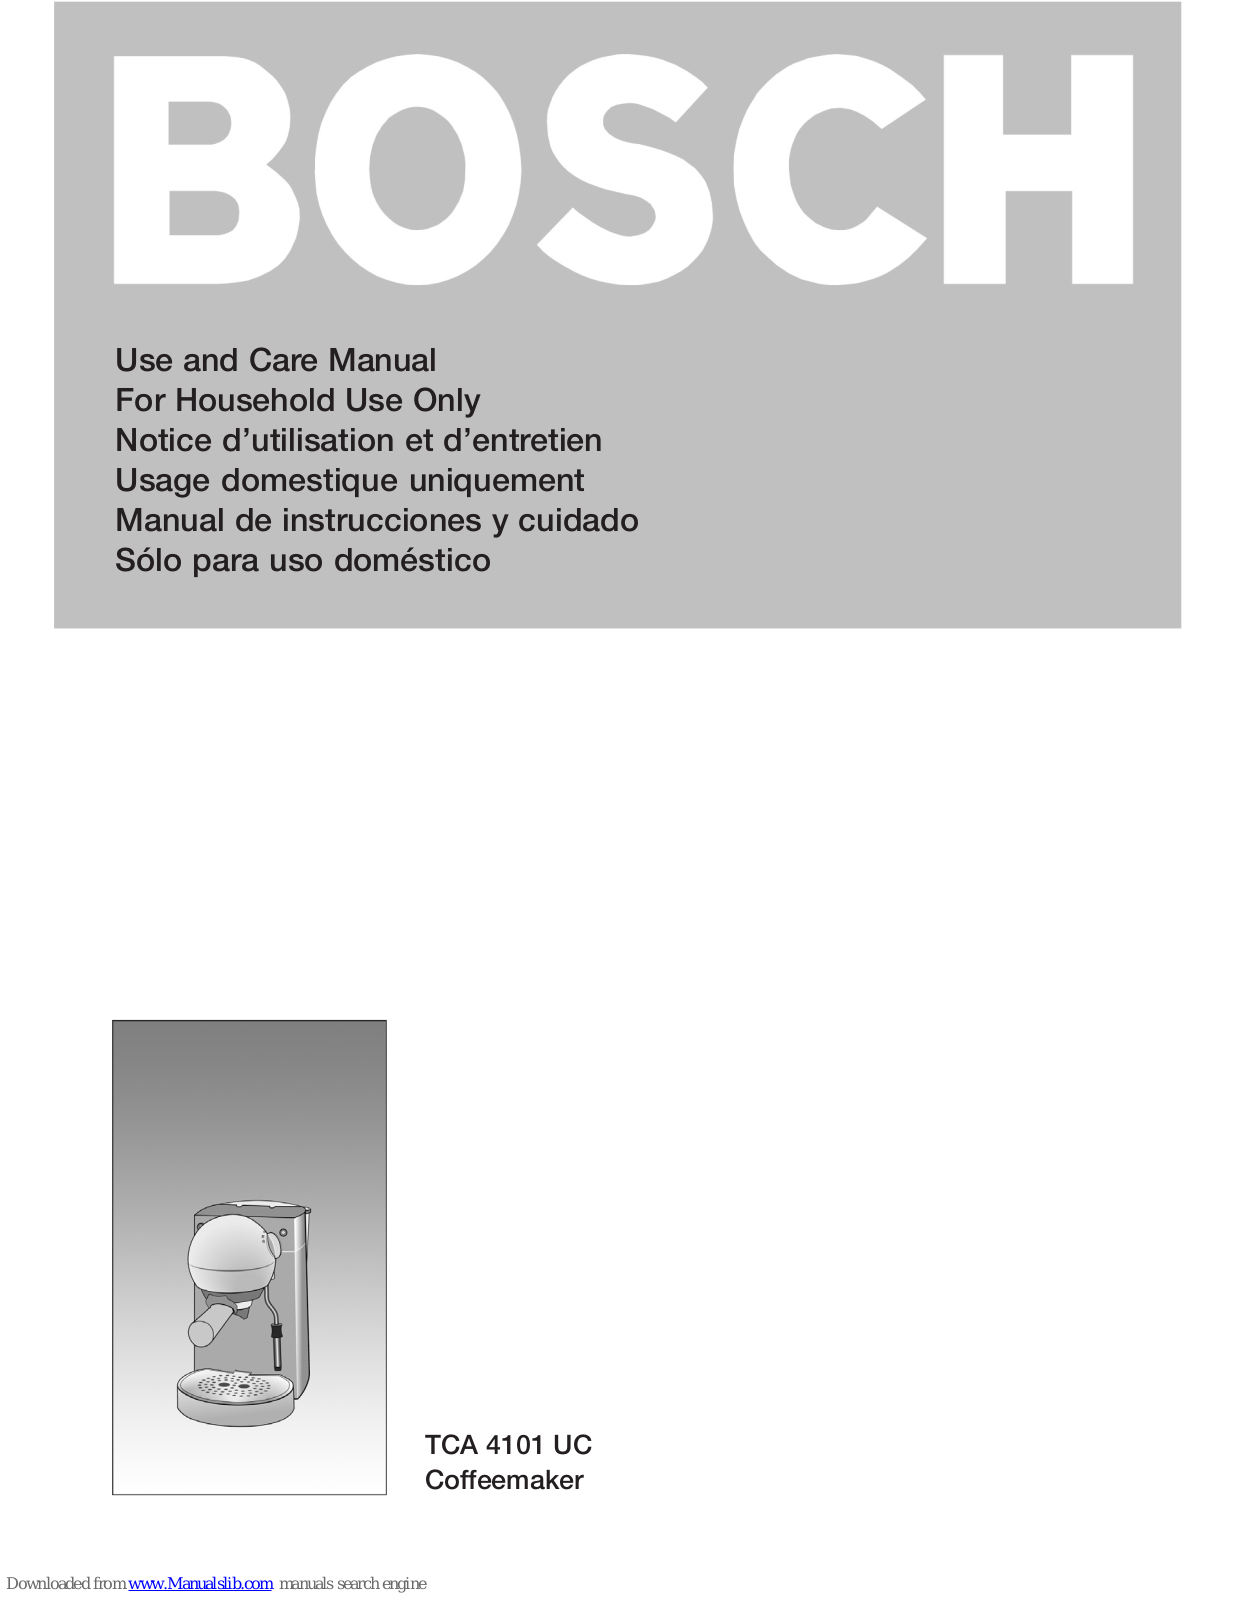 Bosch TCA 4101 UC, BOSCH-PUMP-EBAY Manual